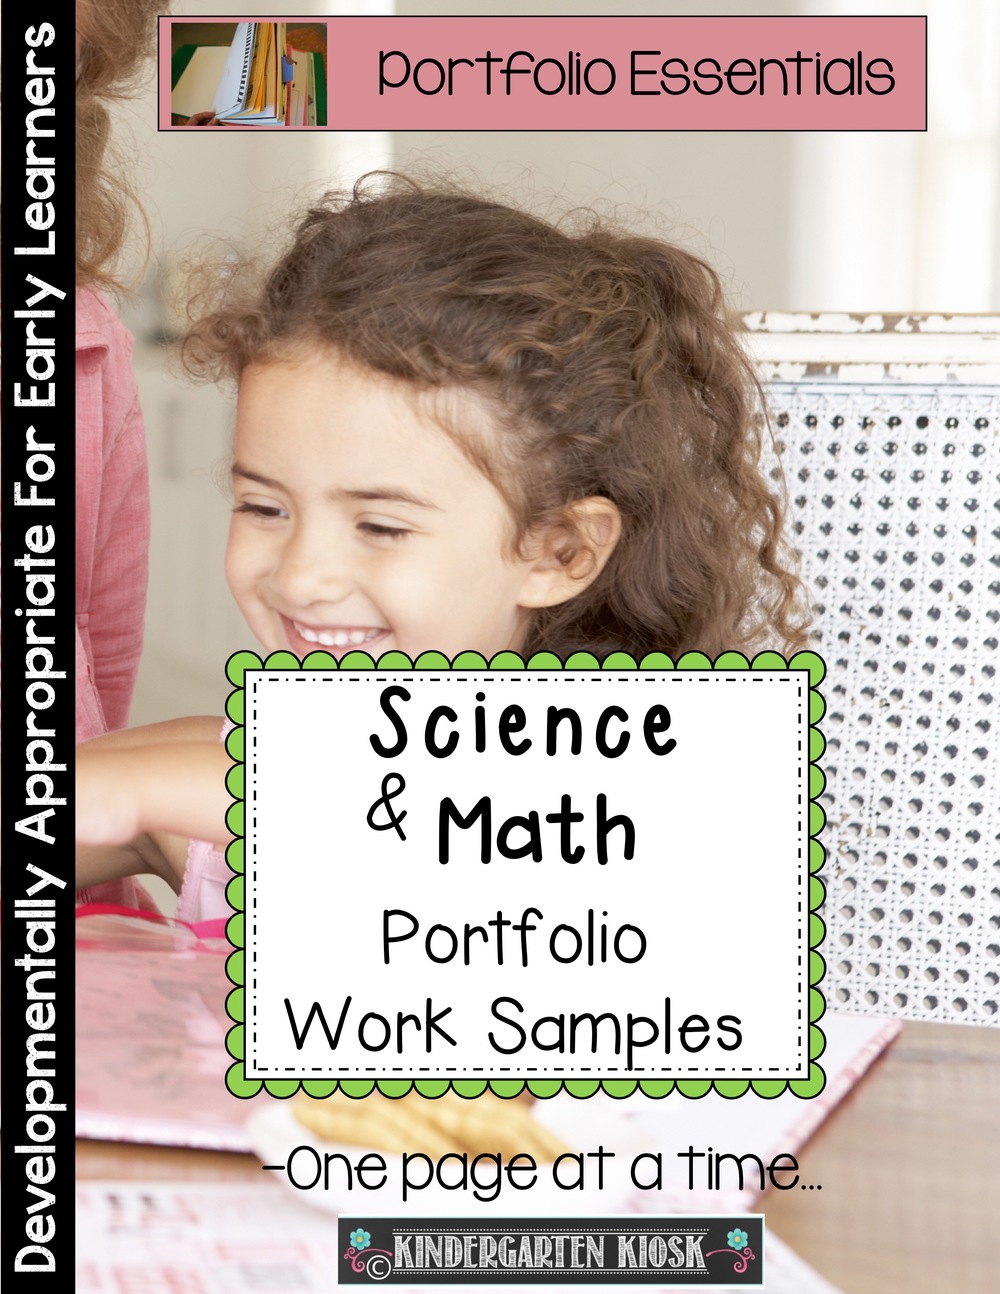 Math and Science Portfolio Work Samples